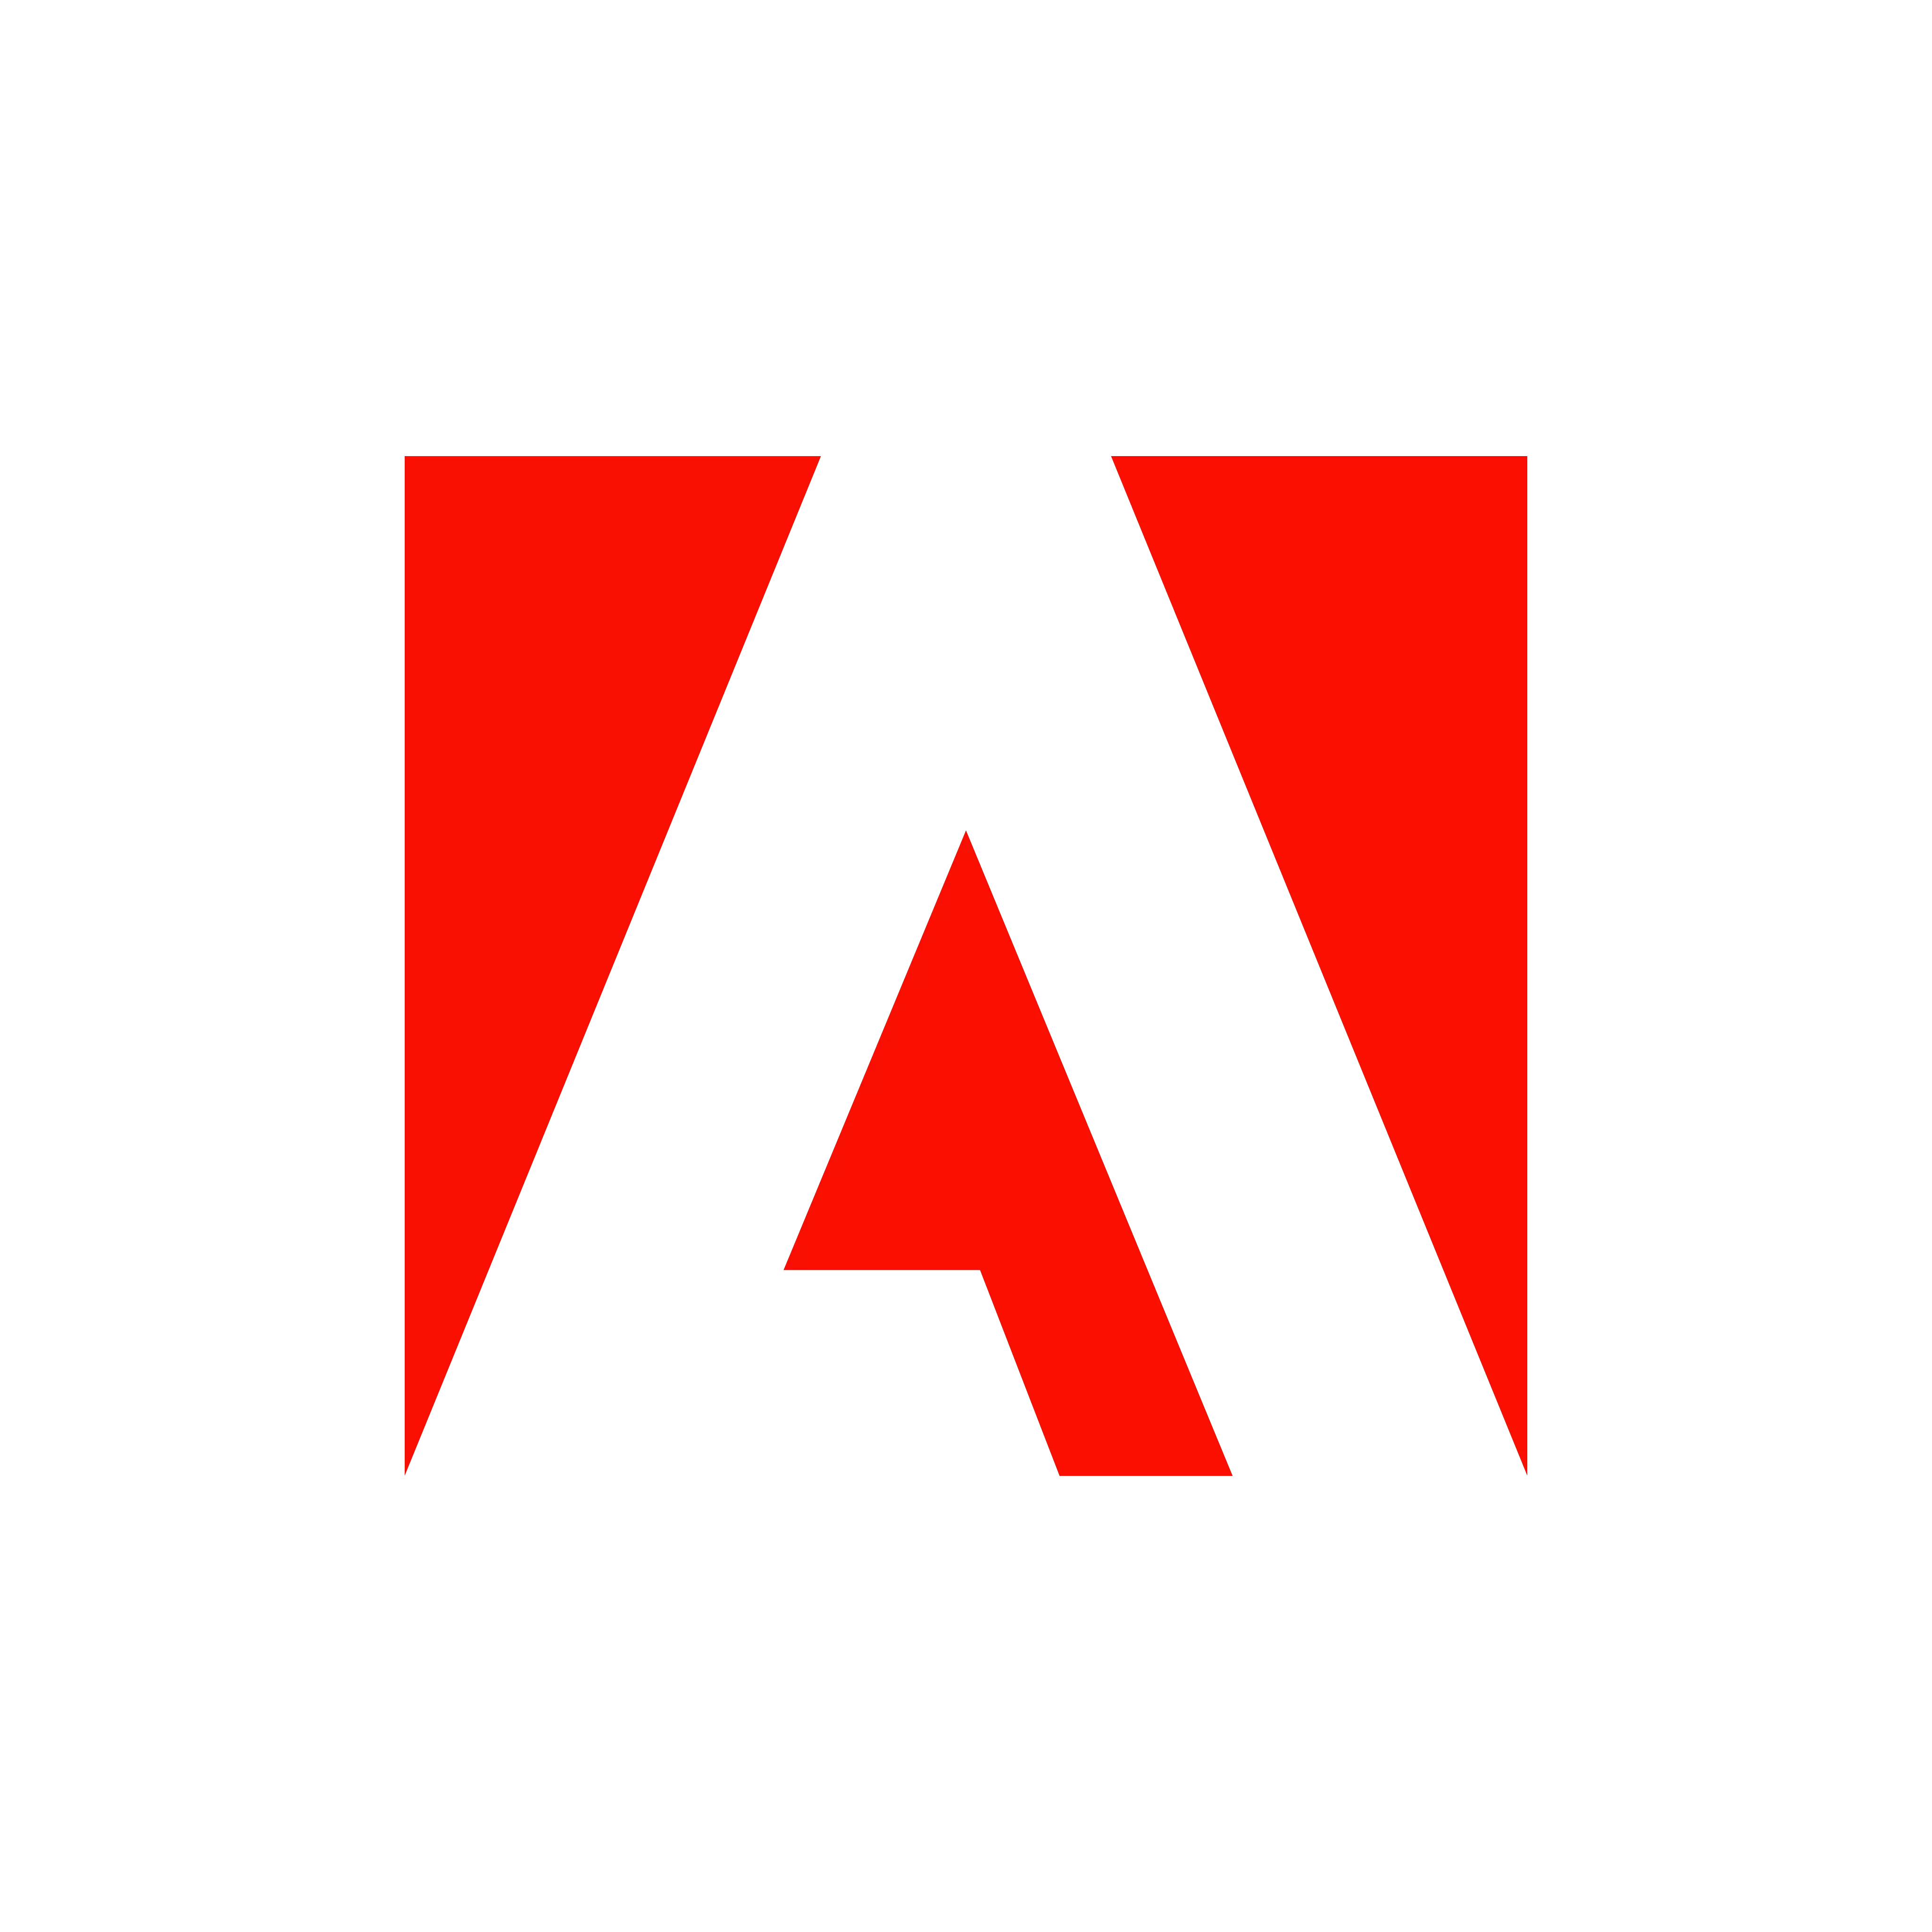 Adobe Extension Development Tools